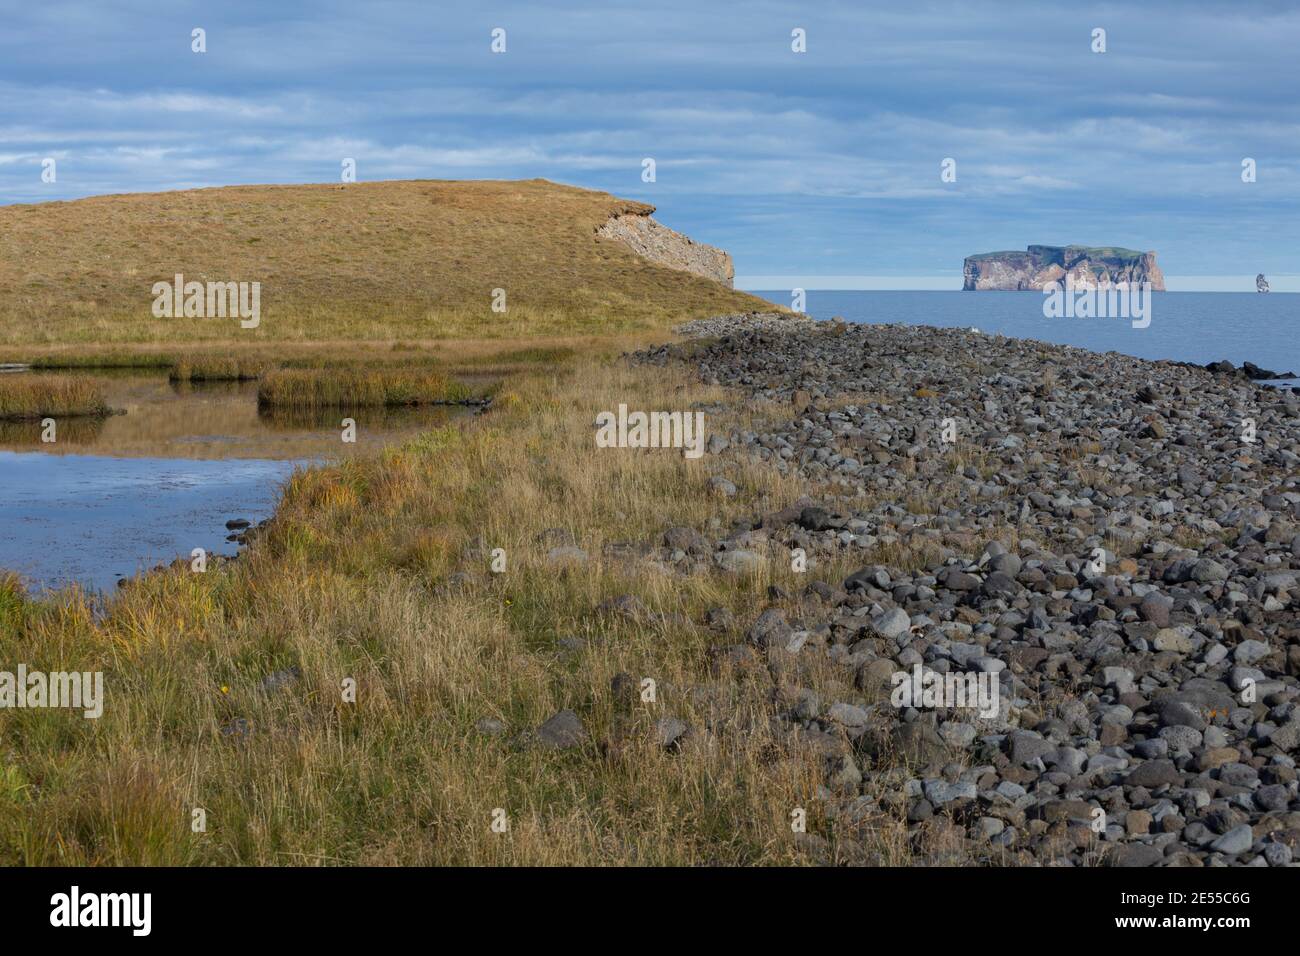 Skagafjörður, Skagafjördur, Fjord, Drangey, isländische Insel in der Mitte des Fjordes Skagafjörður, Vogelinseln, Vogelfelsen, Reykir - Grettislaug, N Stock Photo